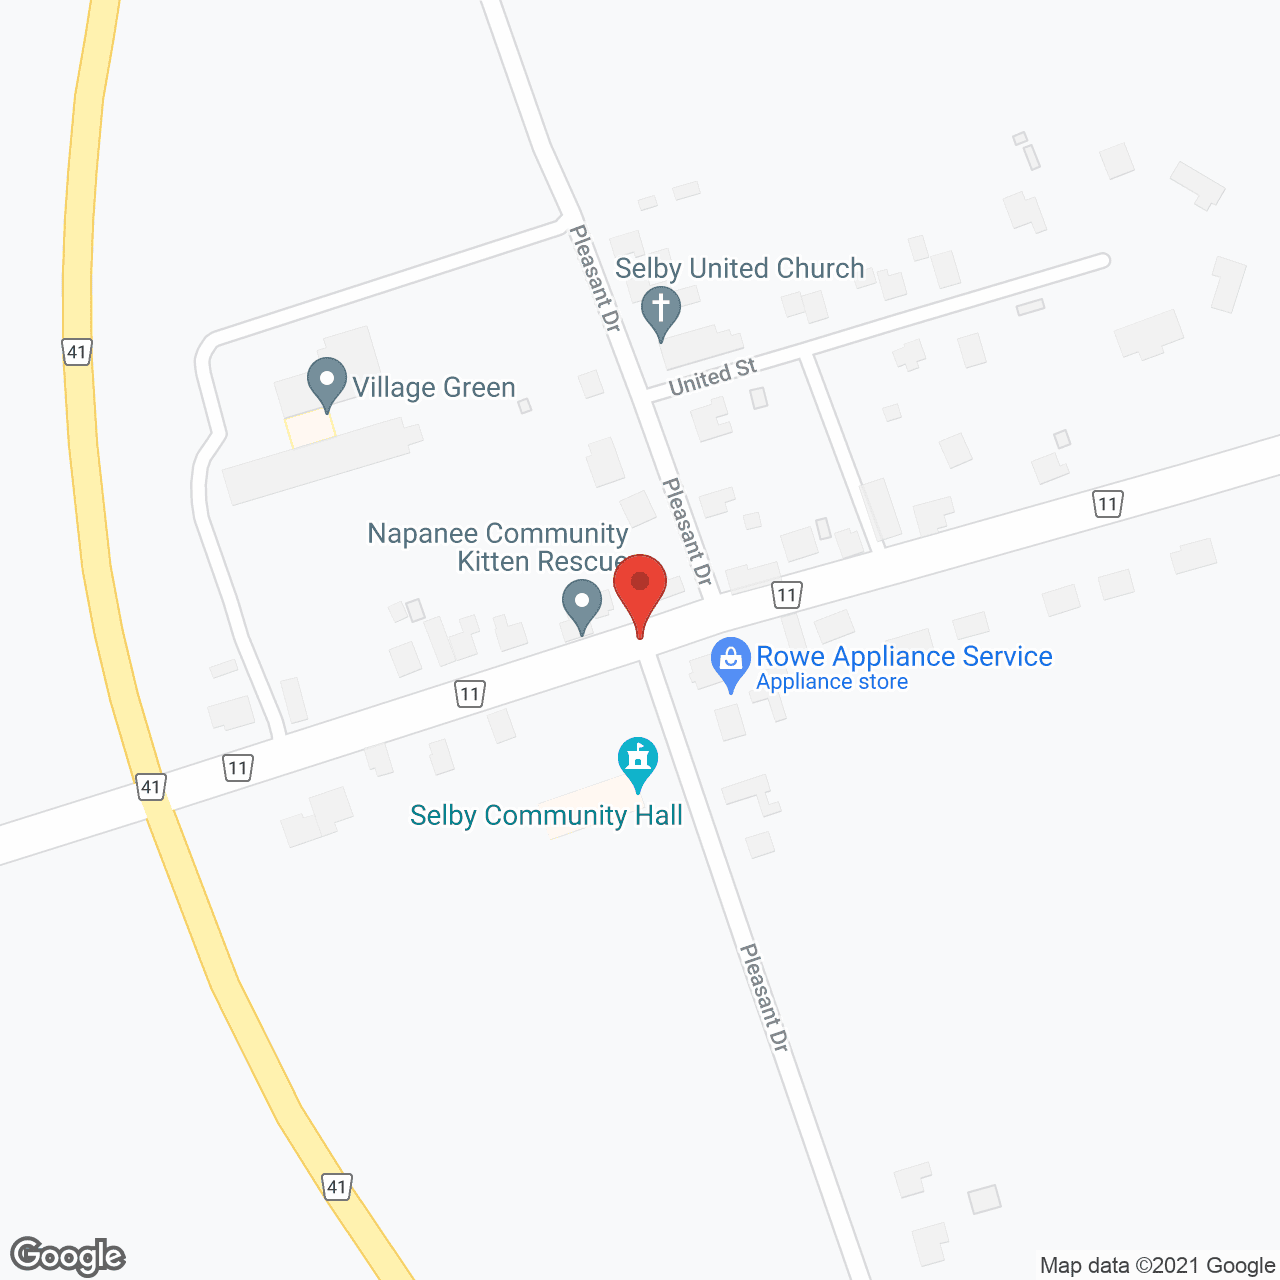 Village Green Nursing Home in google map